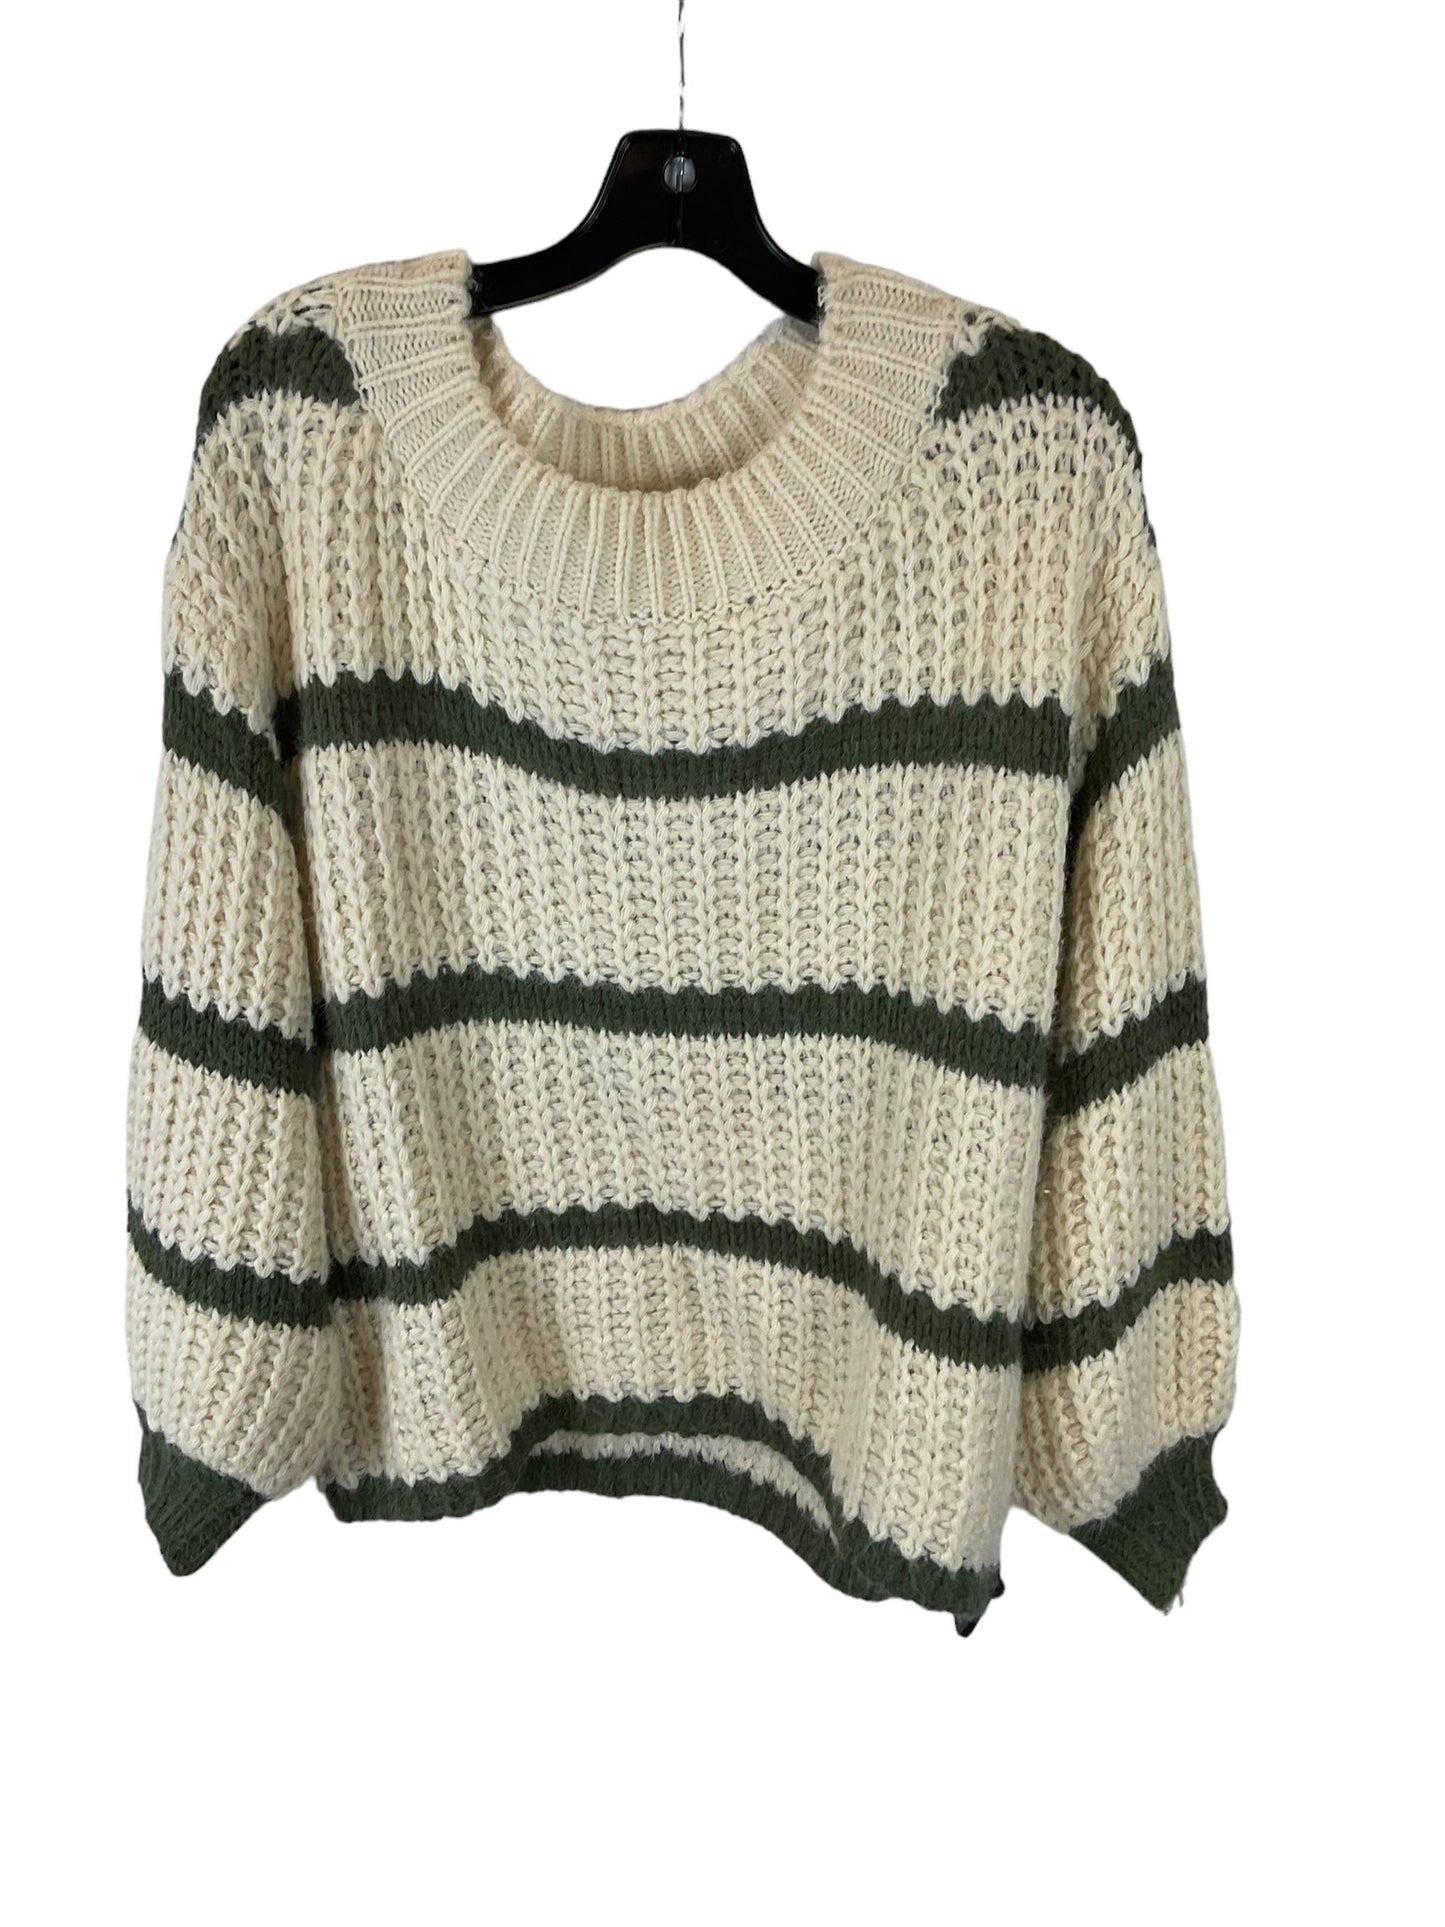 Sweater By Kori America  Size: S